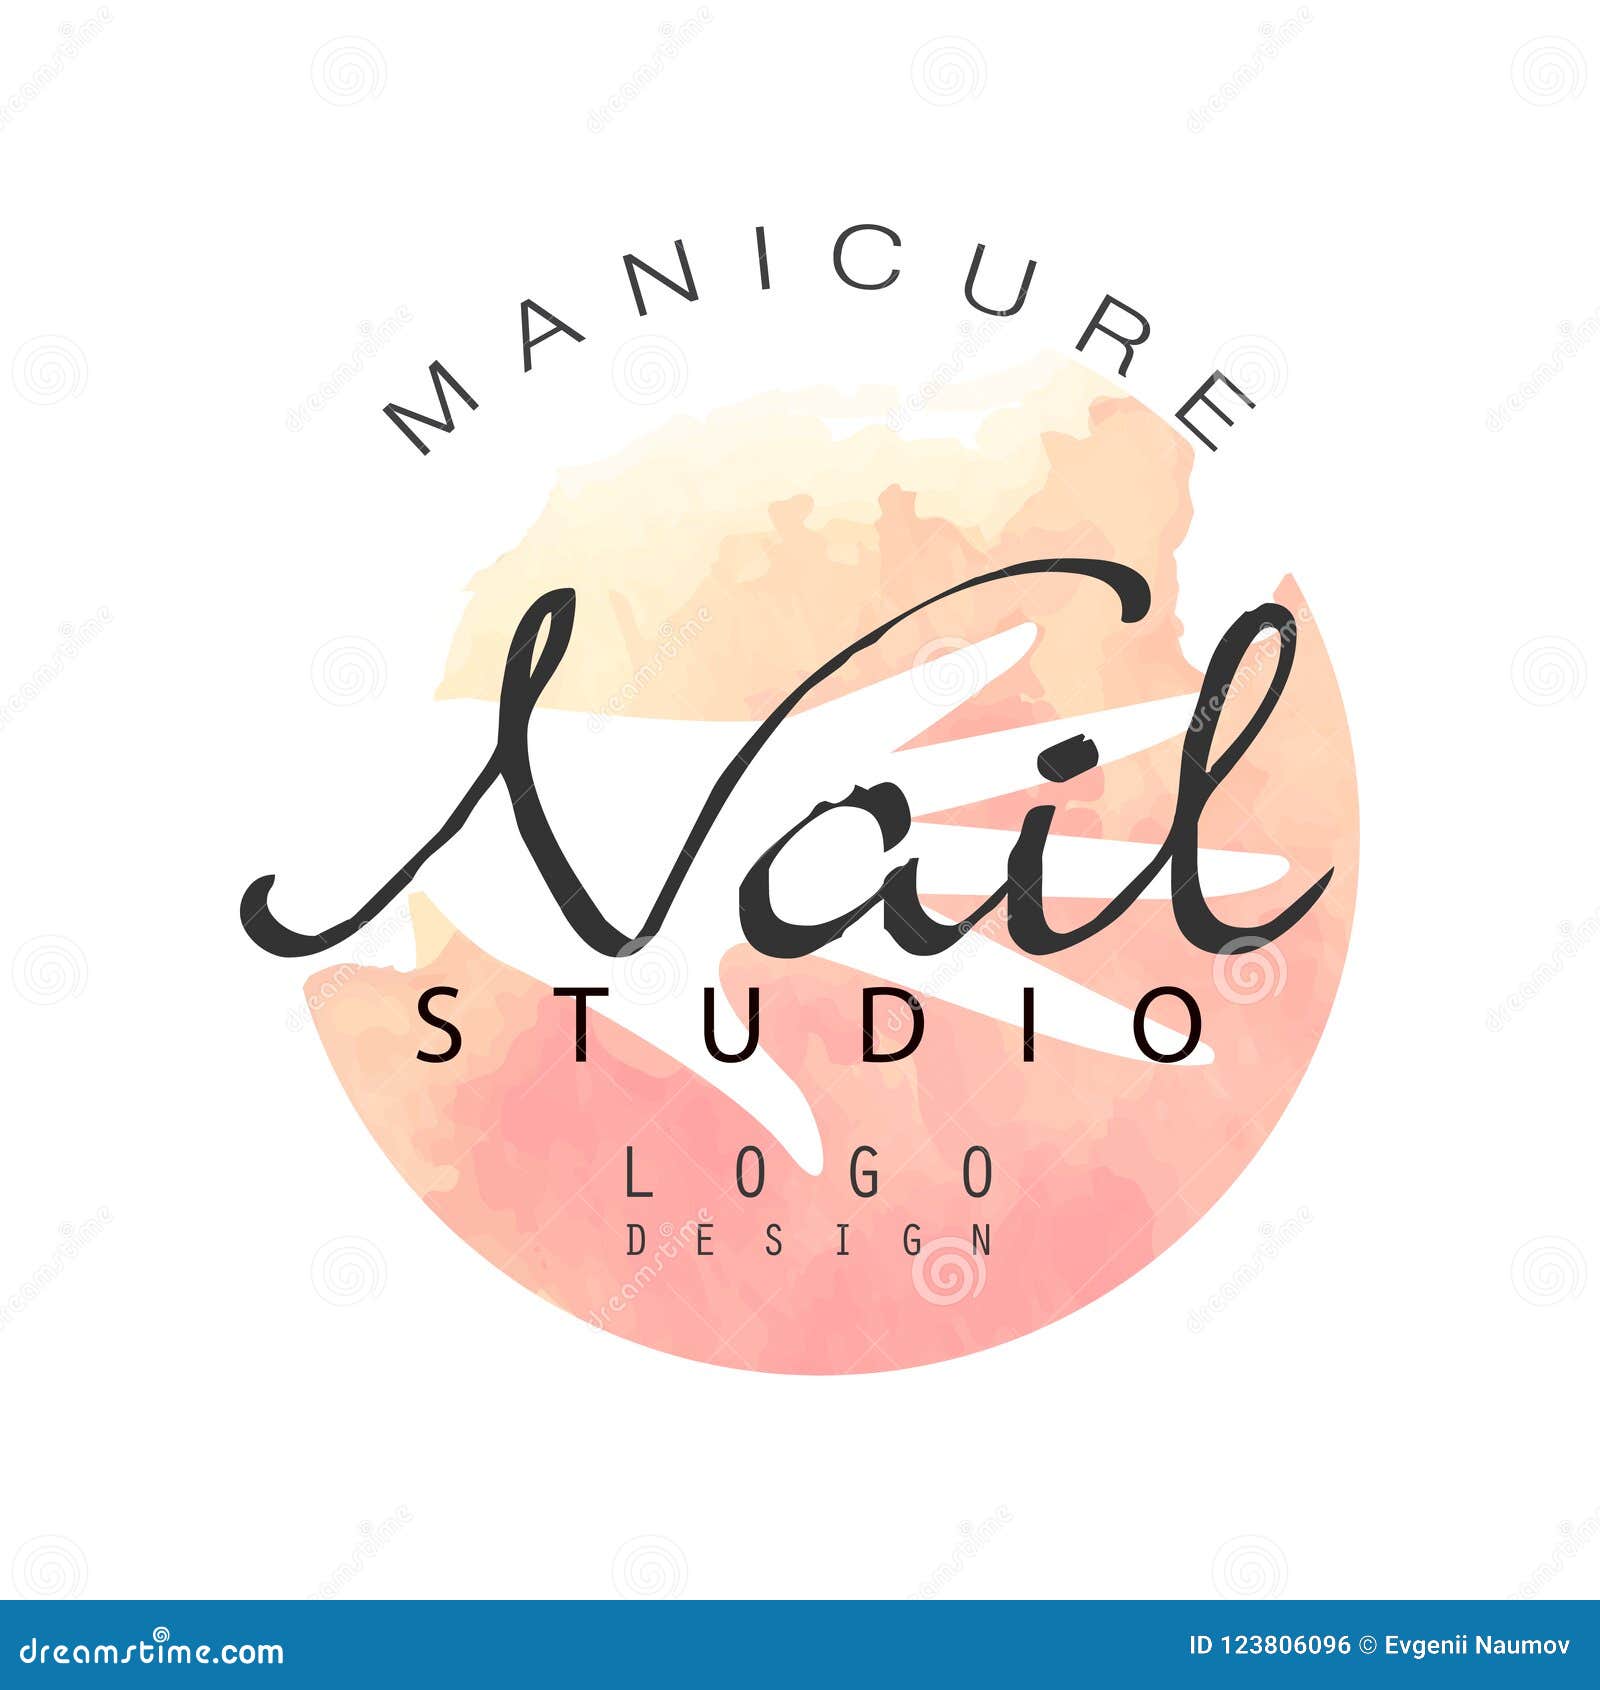 Nail Art Business Logo Template | PosterMyWall